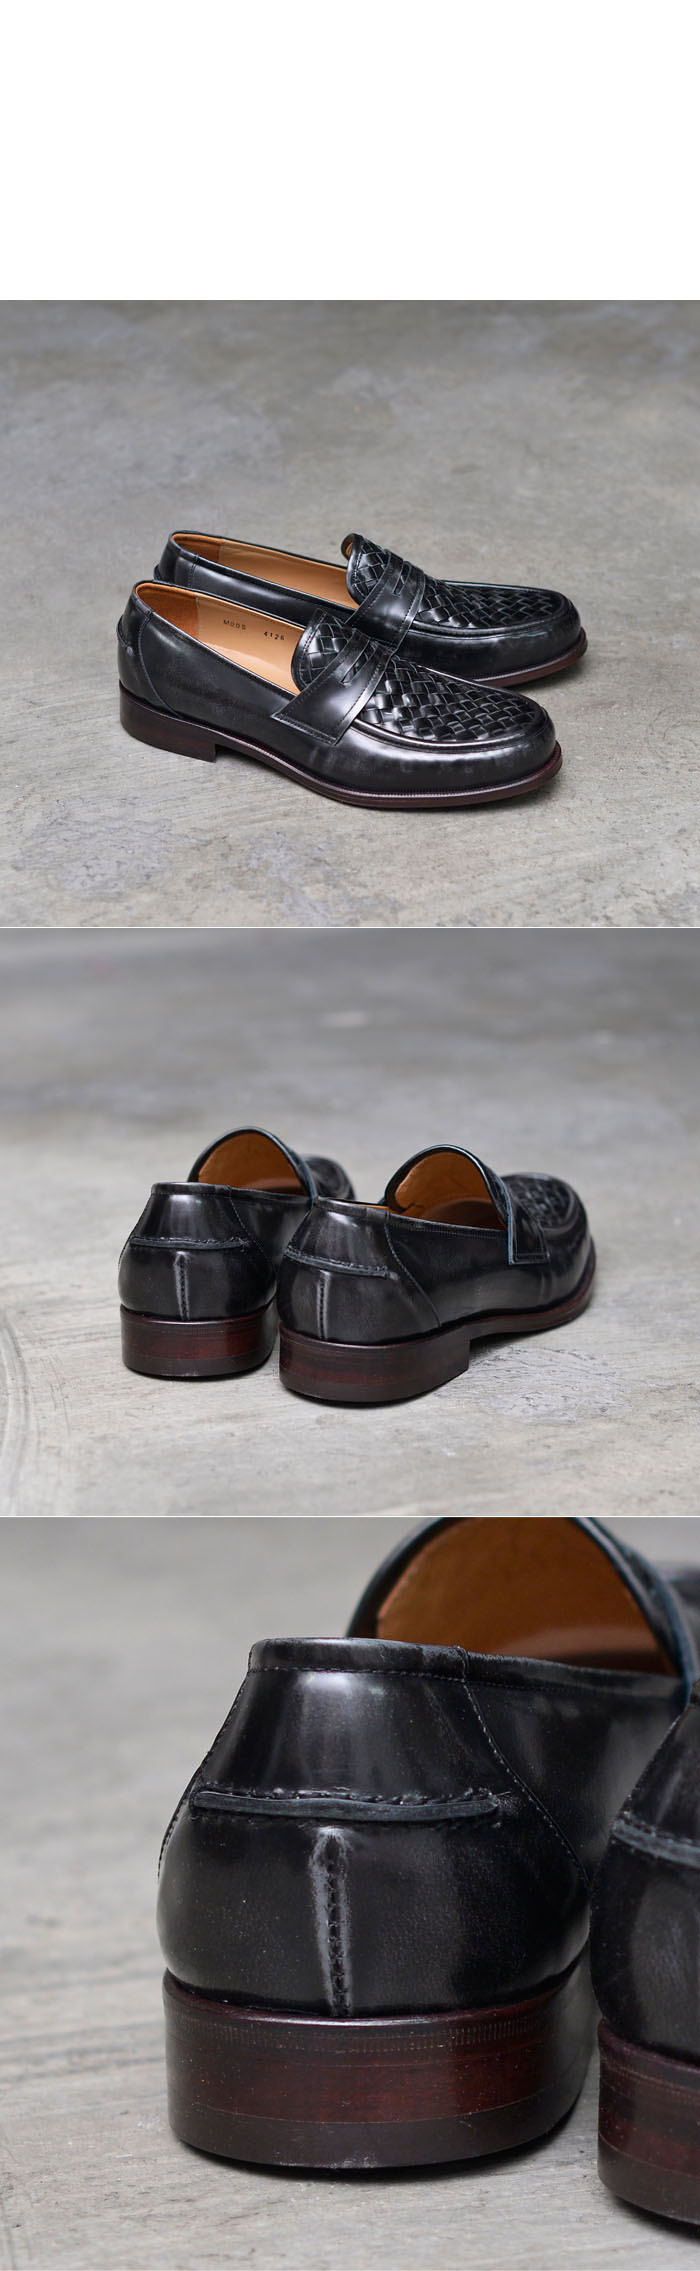 Shoes :: Premium Kipskin Braided Loafer-Shoes 452 - GUYLOOK Men's ...